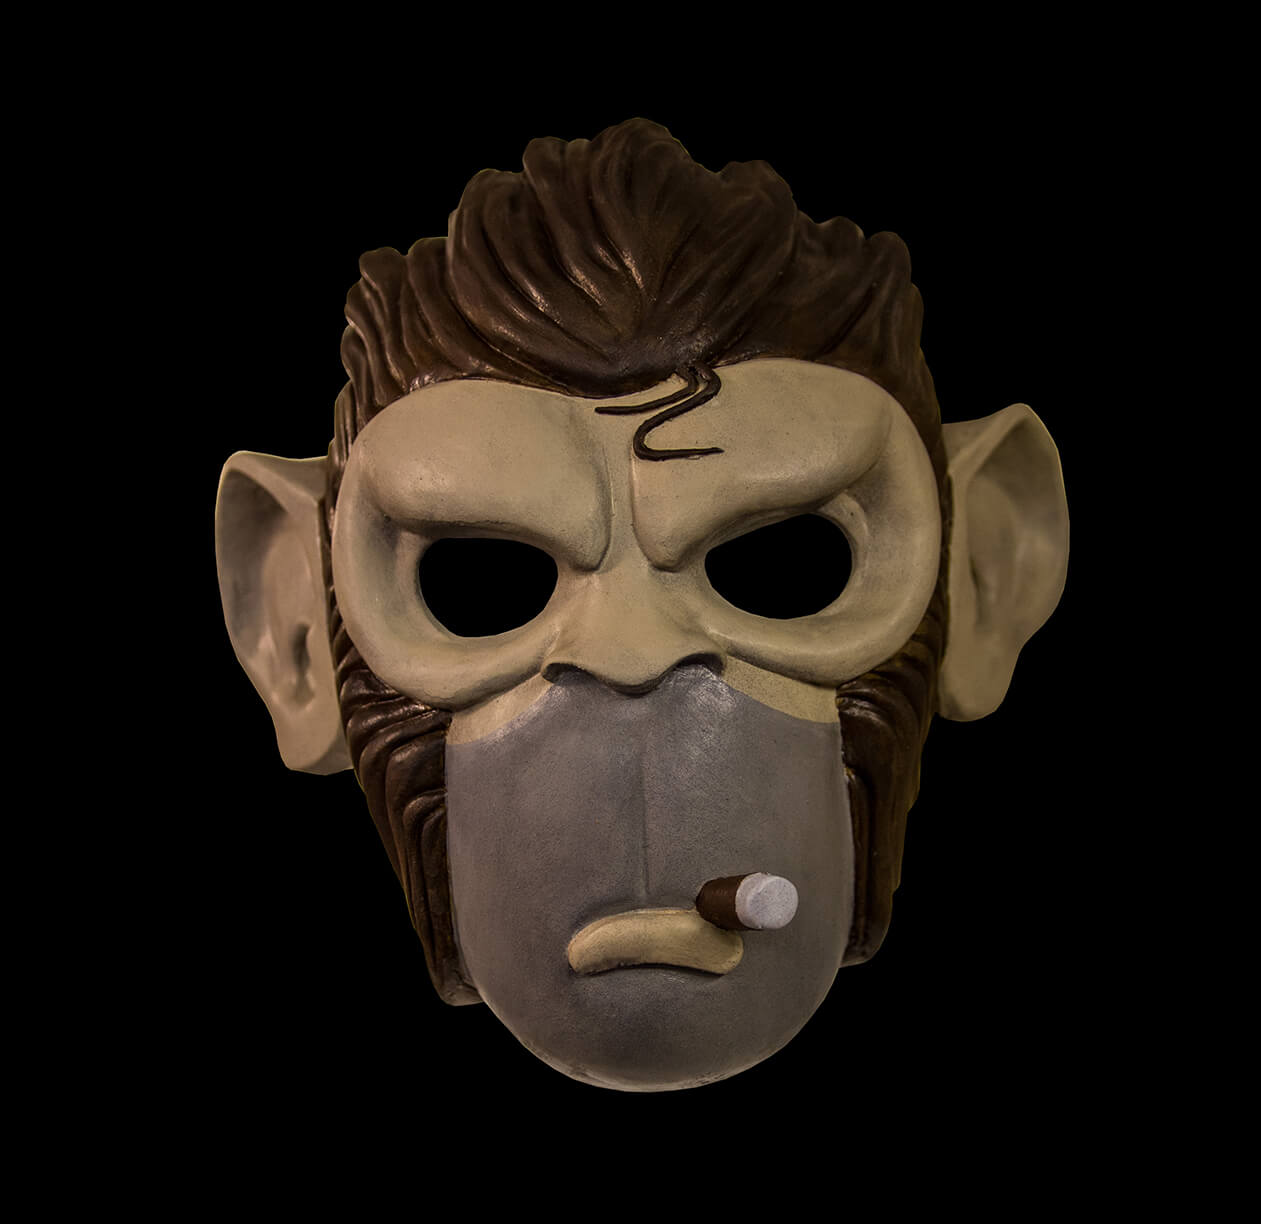 The Monkeys Mask